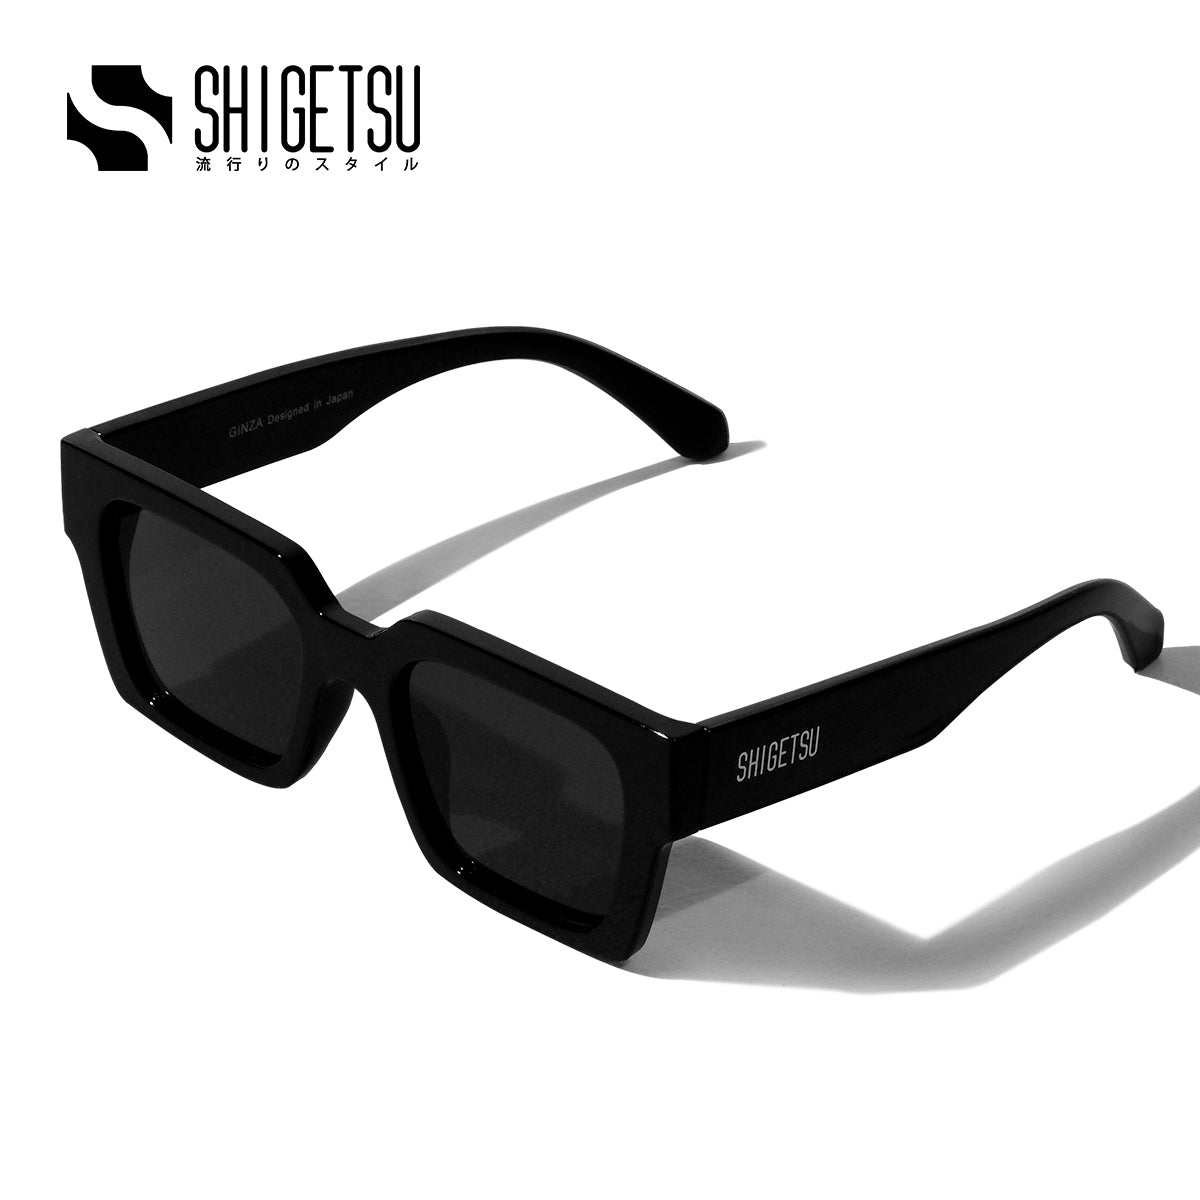 Shigetsu GINZA Sun Shield Glasses In Acetate Frame Summer Fashion Eyeglasses for Men UV400